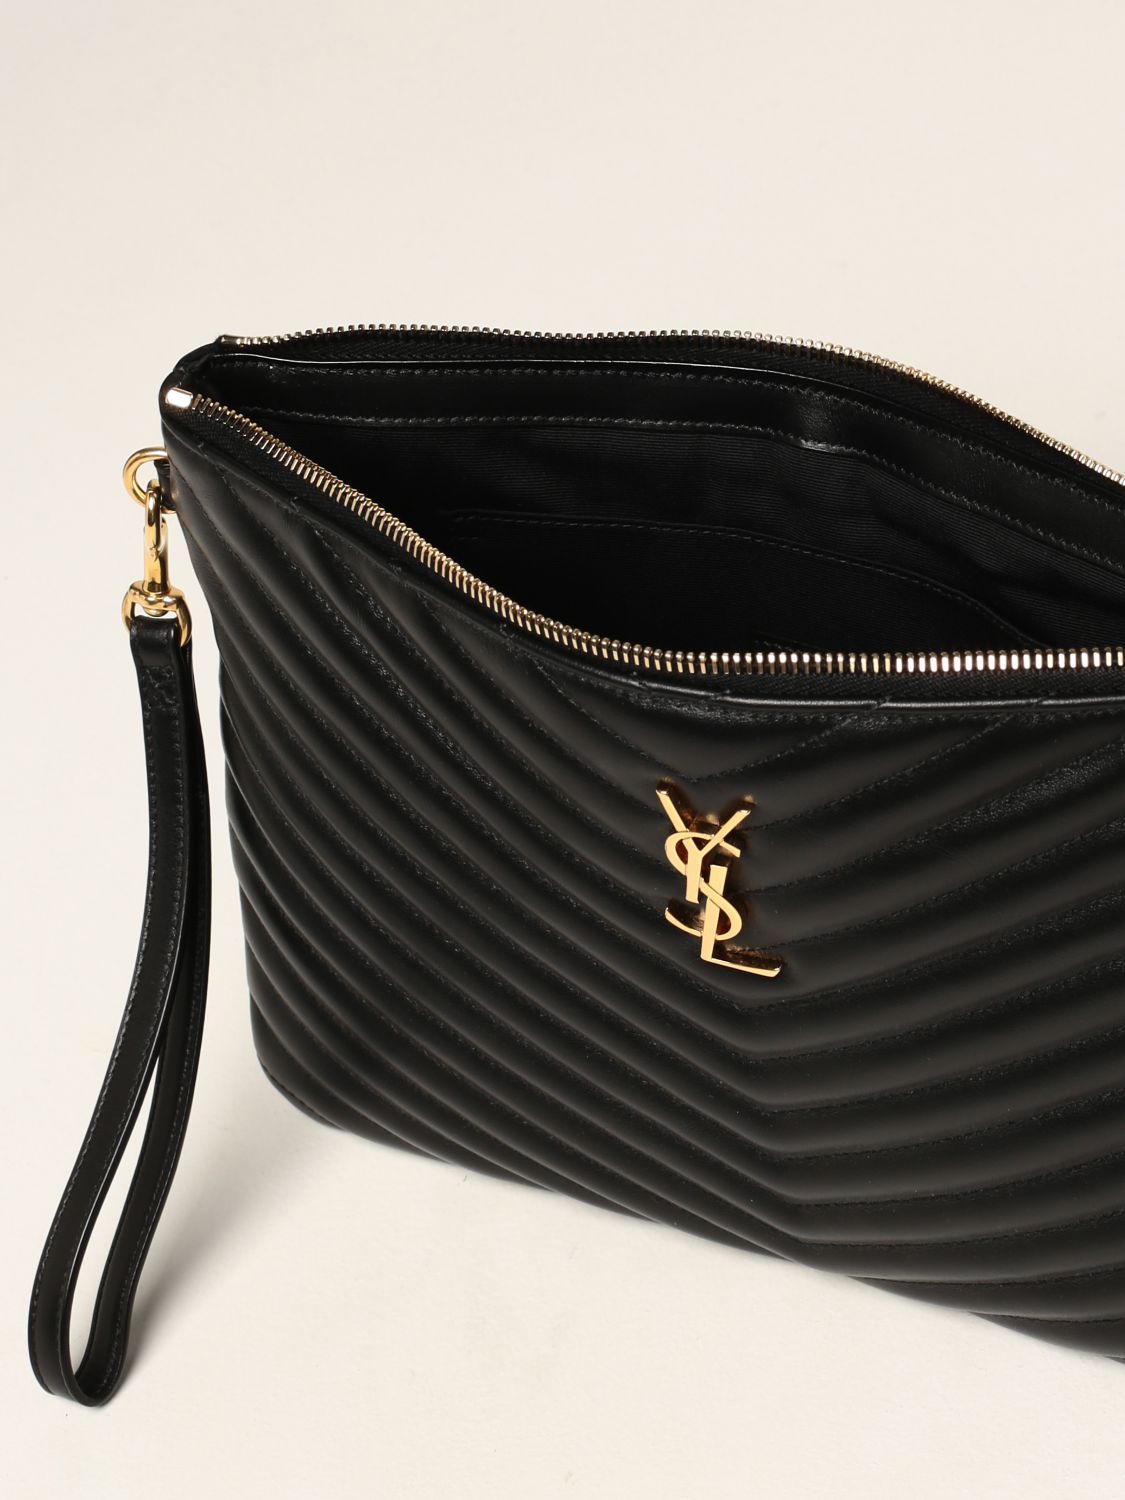 SAINT LAURENT - Monogram quilted leather purse